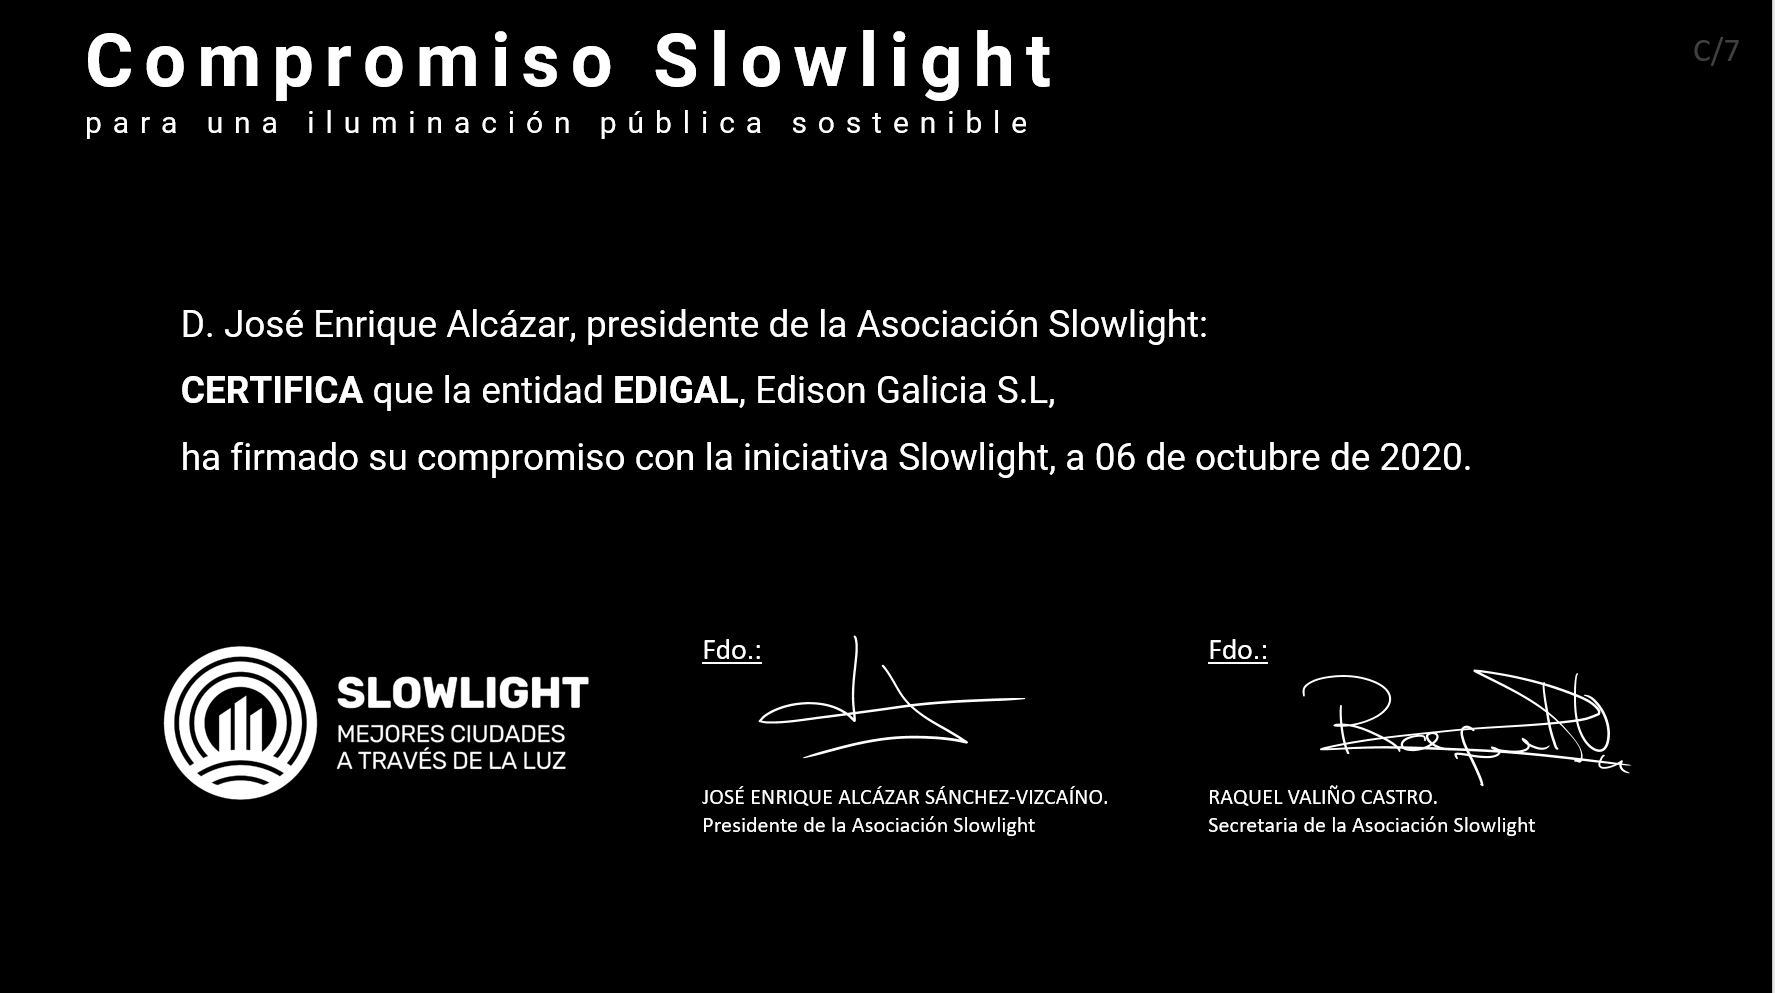 Compromiso Slowlight